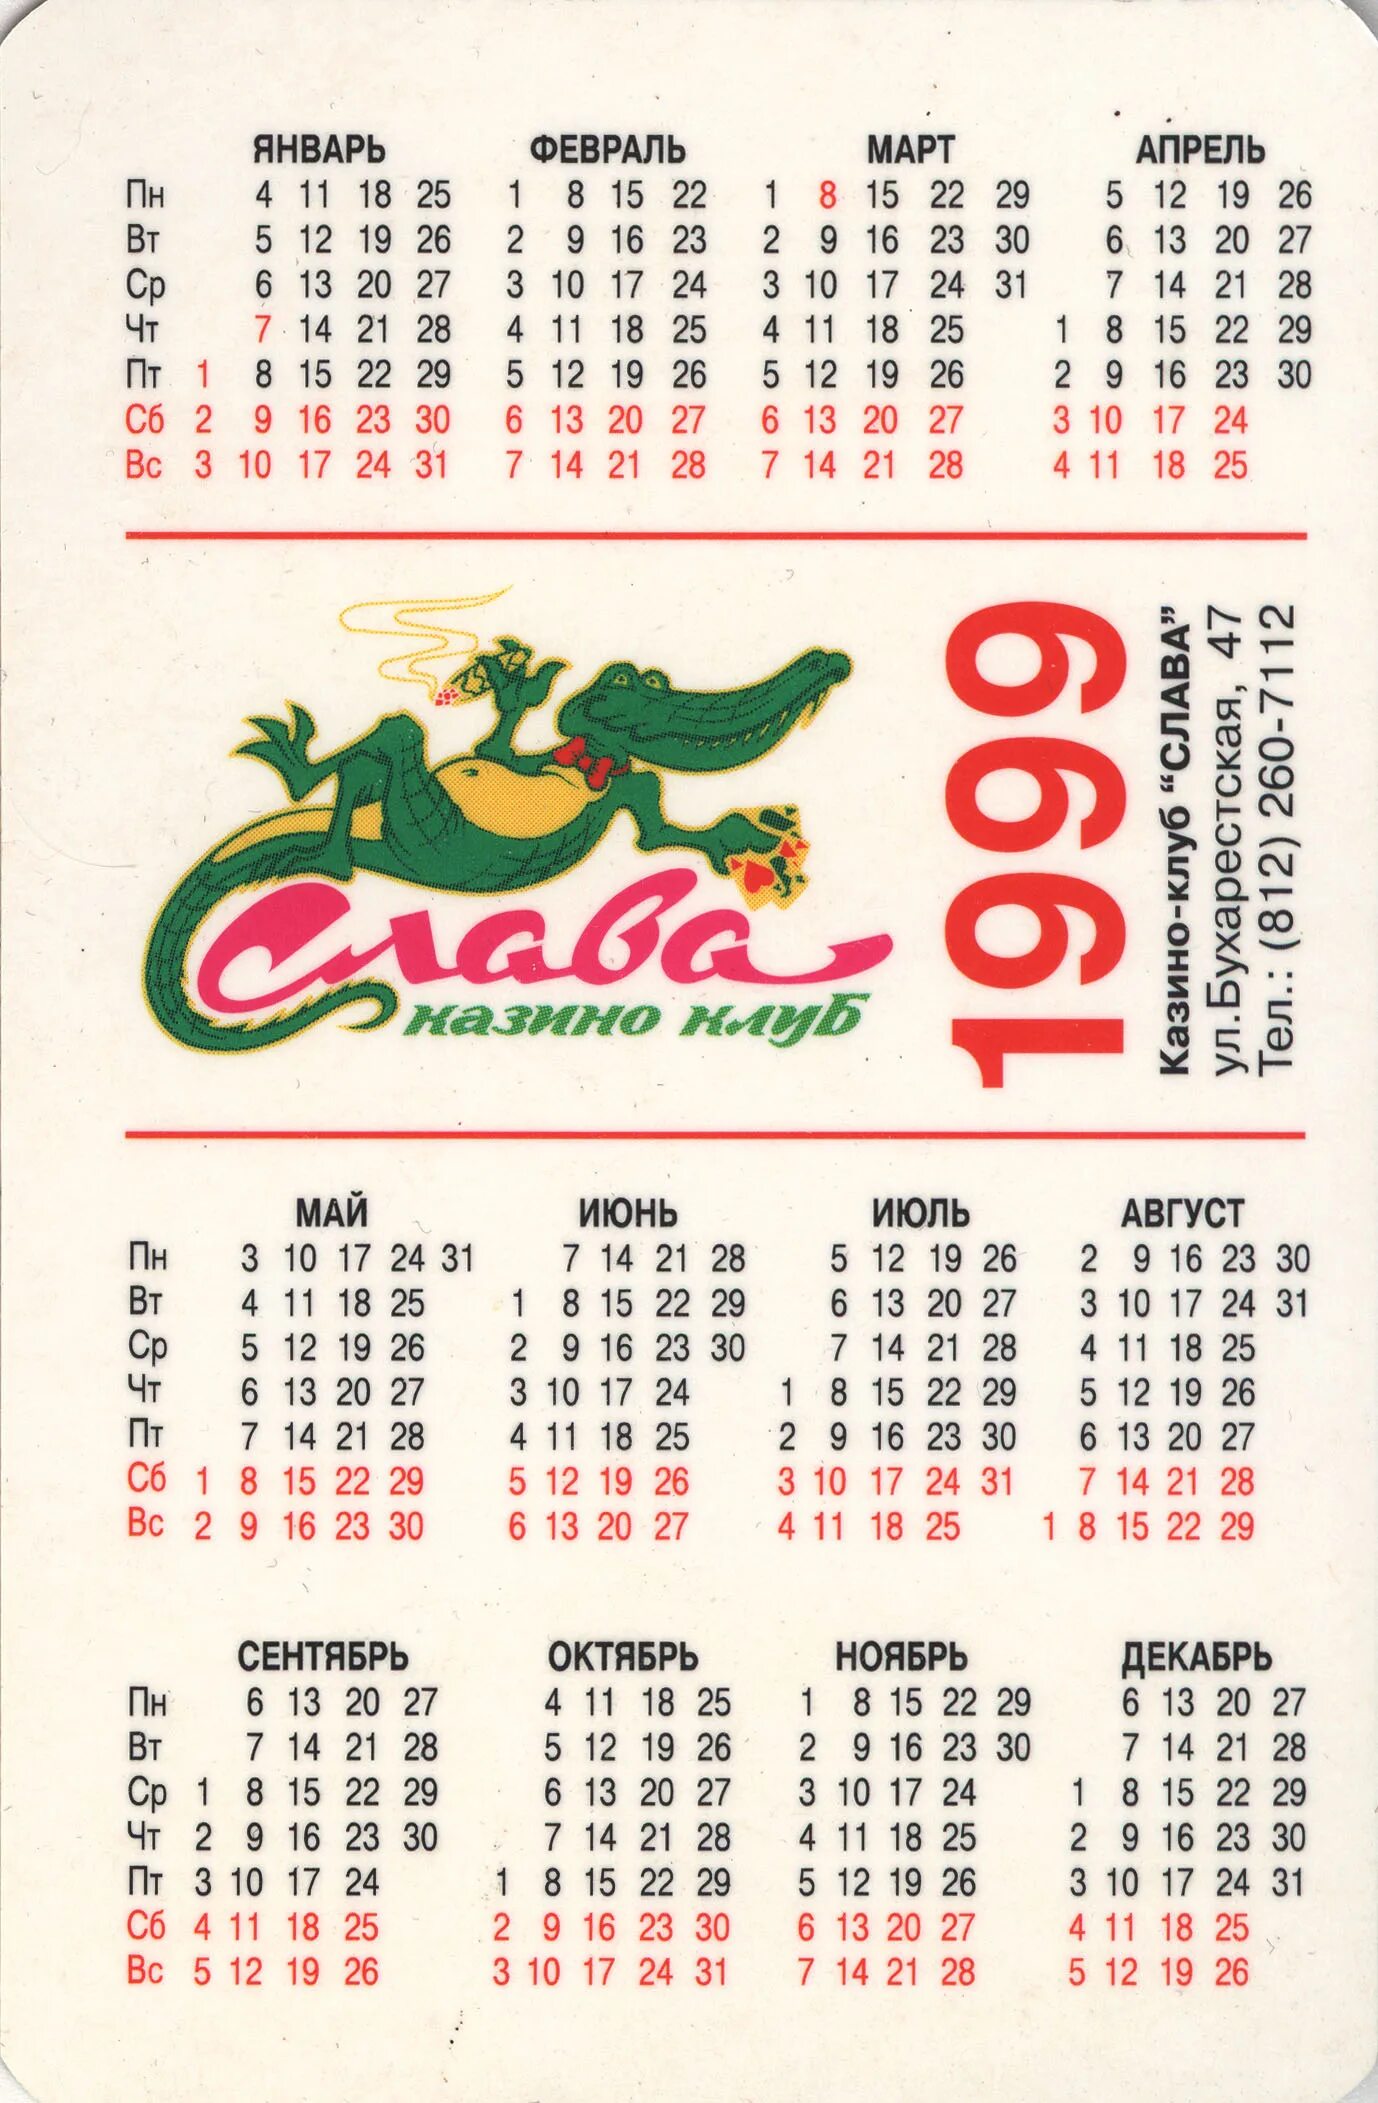 1 июля 1999. Календарь 1999 года. Календарик 1999 года. Календарь 1999 года по месяцам. Июль 1999 года календарь.